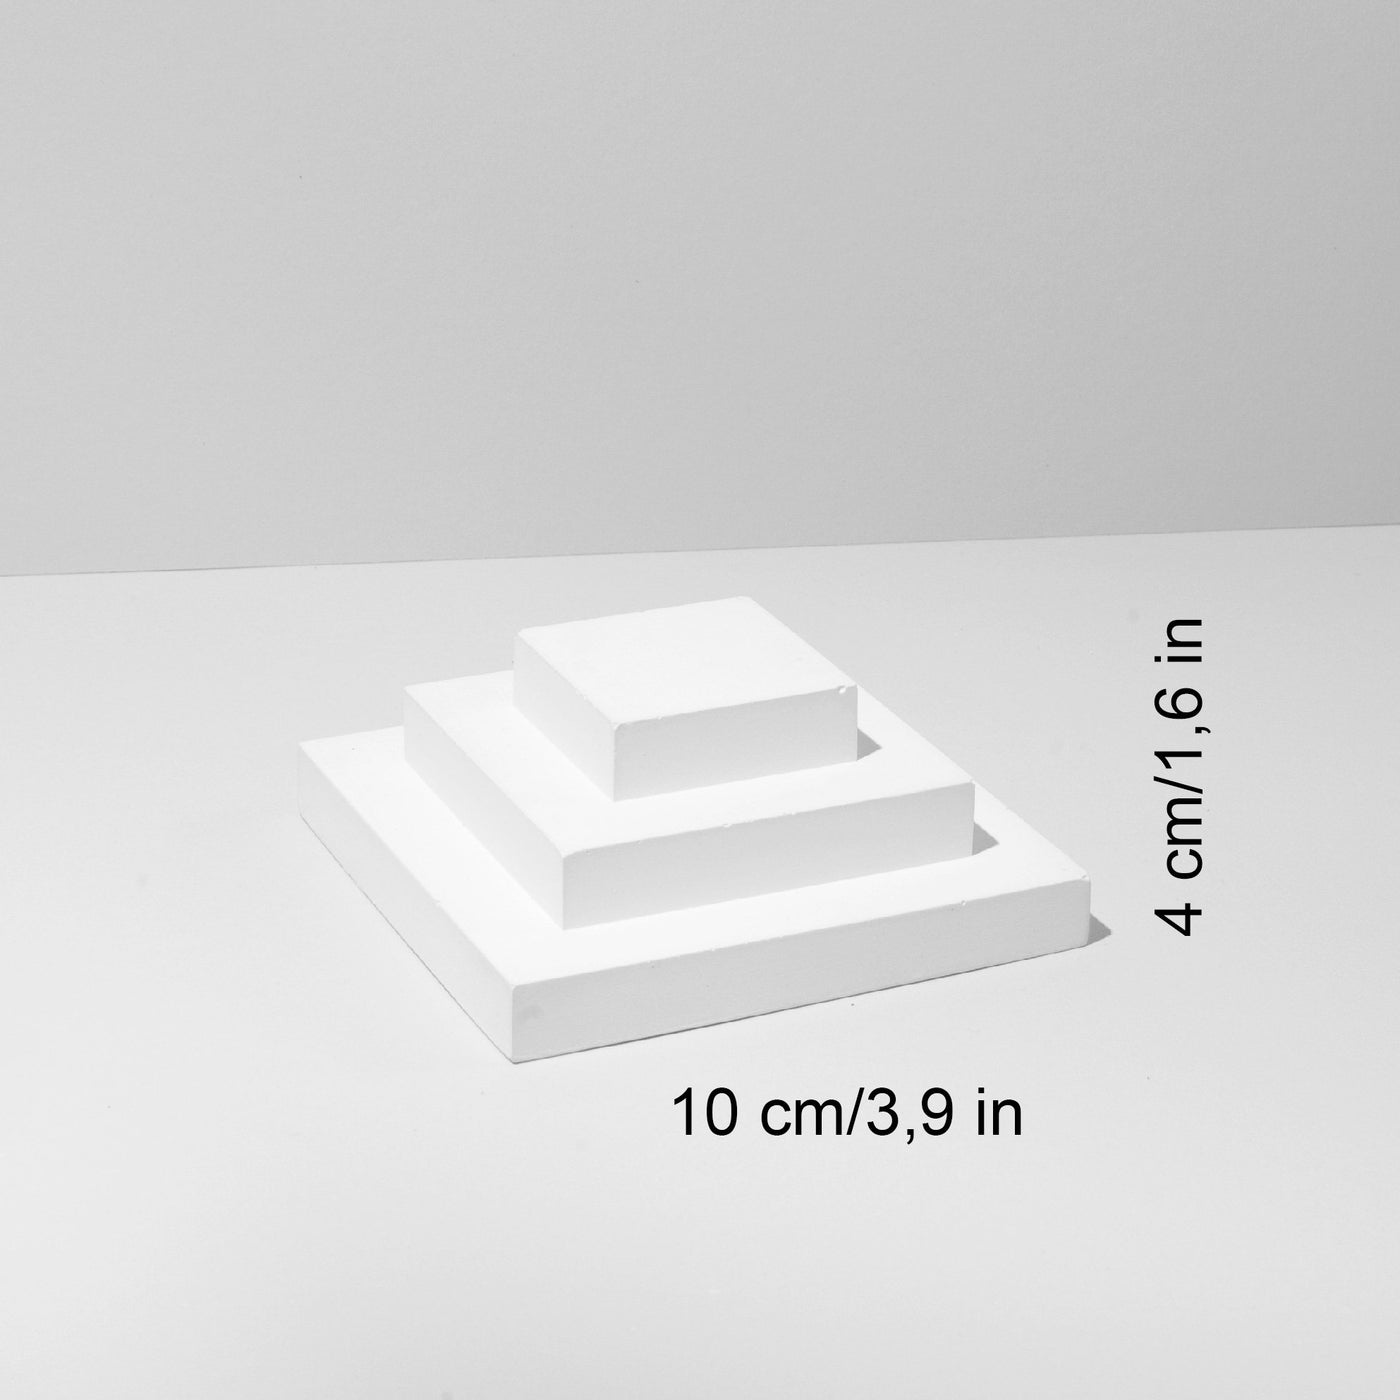 Tiered Square Display 10 cmx4 cm